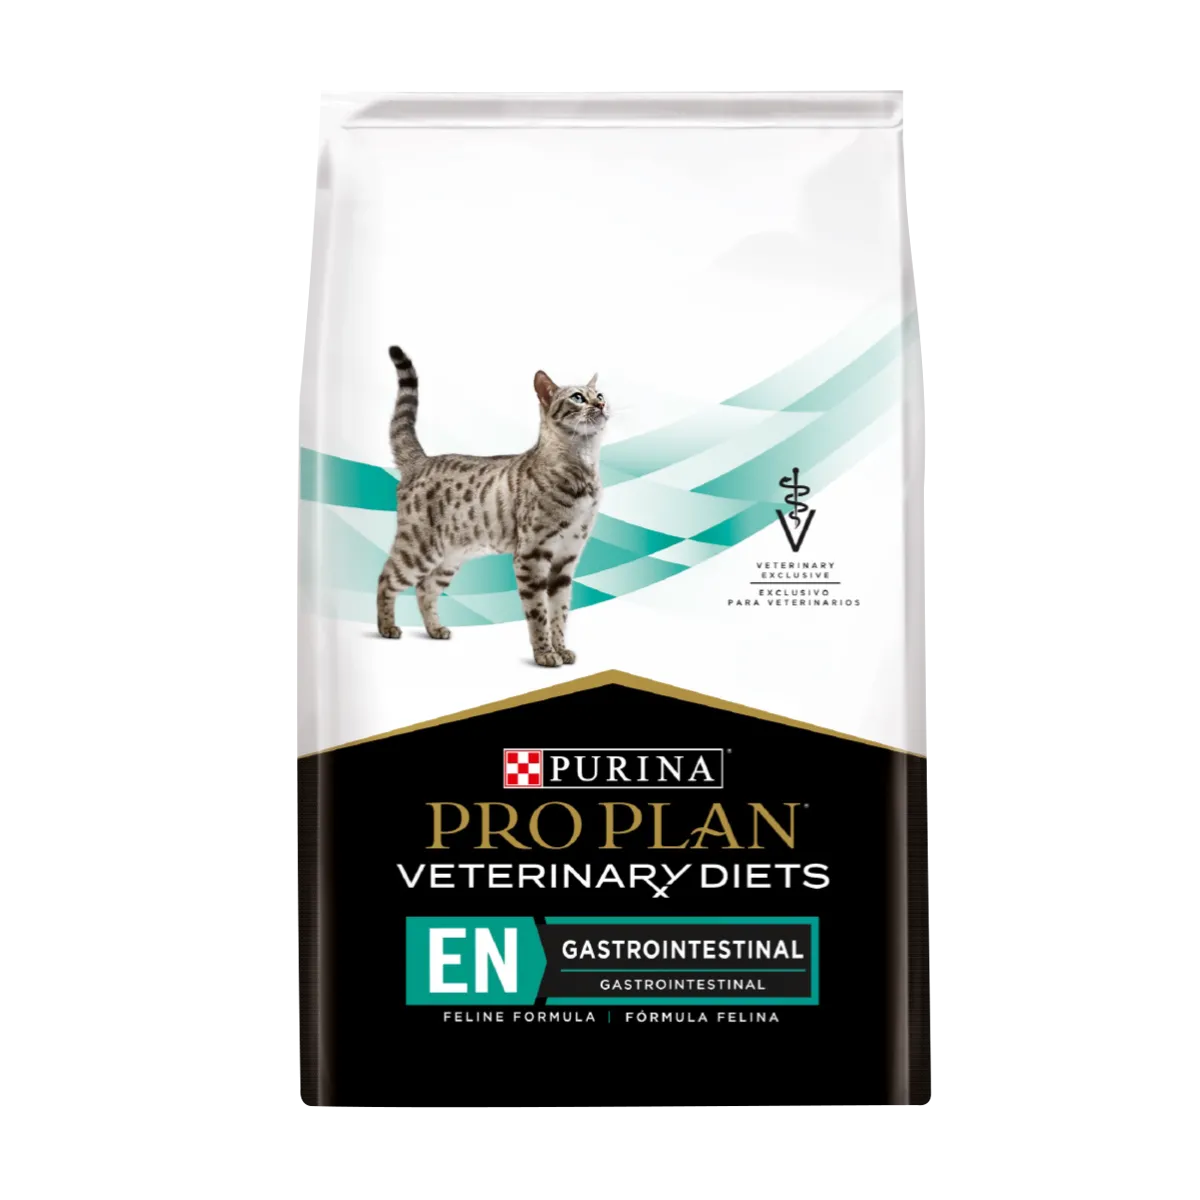 purina-pro-plan-veterinay-diets-cat-en-gastrointestinal.png.webp